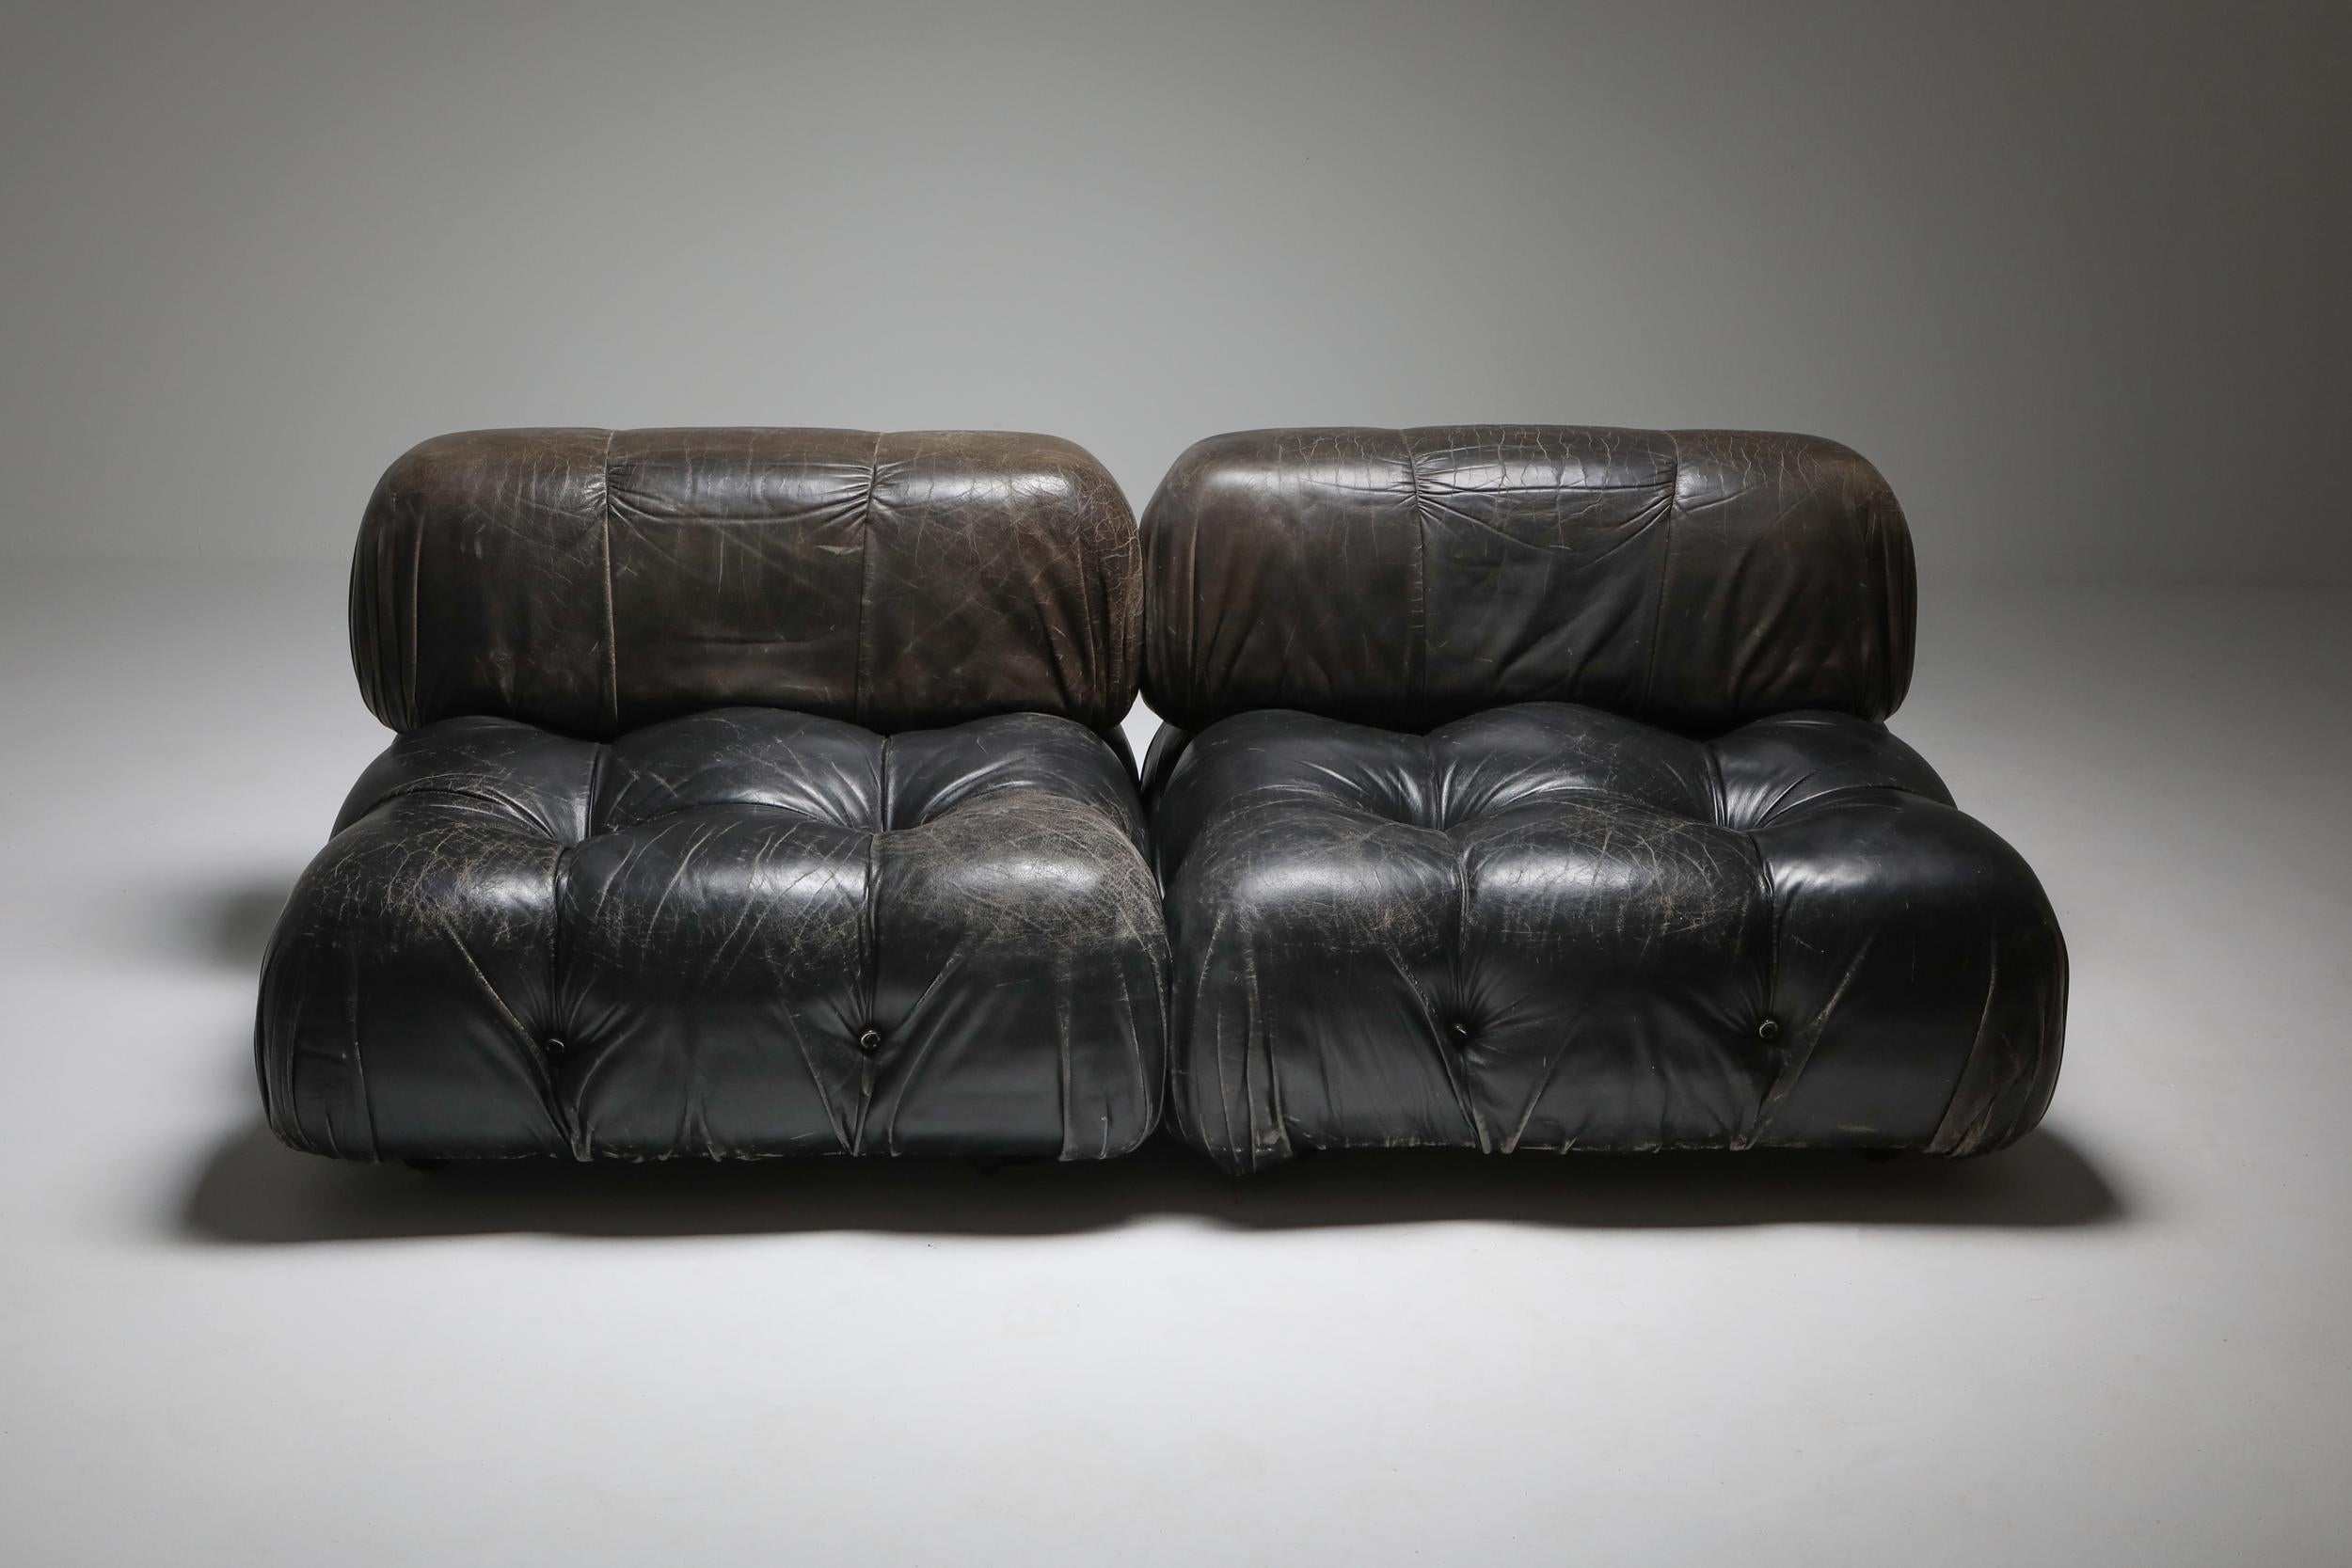 Post-Modern Mario Bellini's 'Camaleonda' Lounge Chairs in Original Black Leather